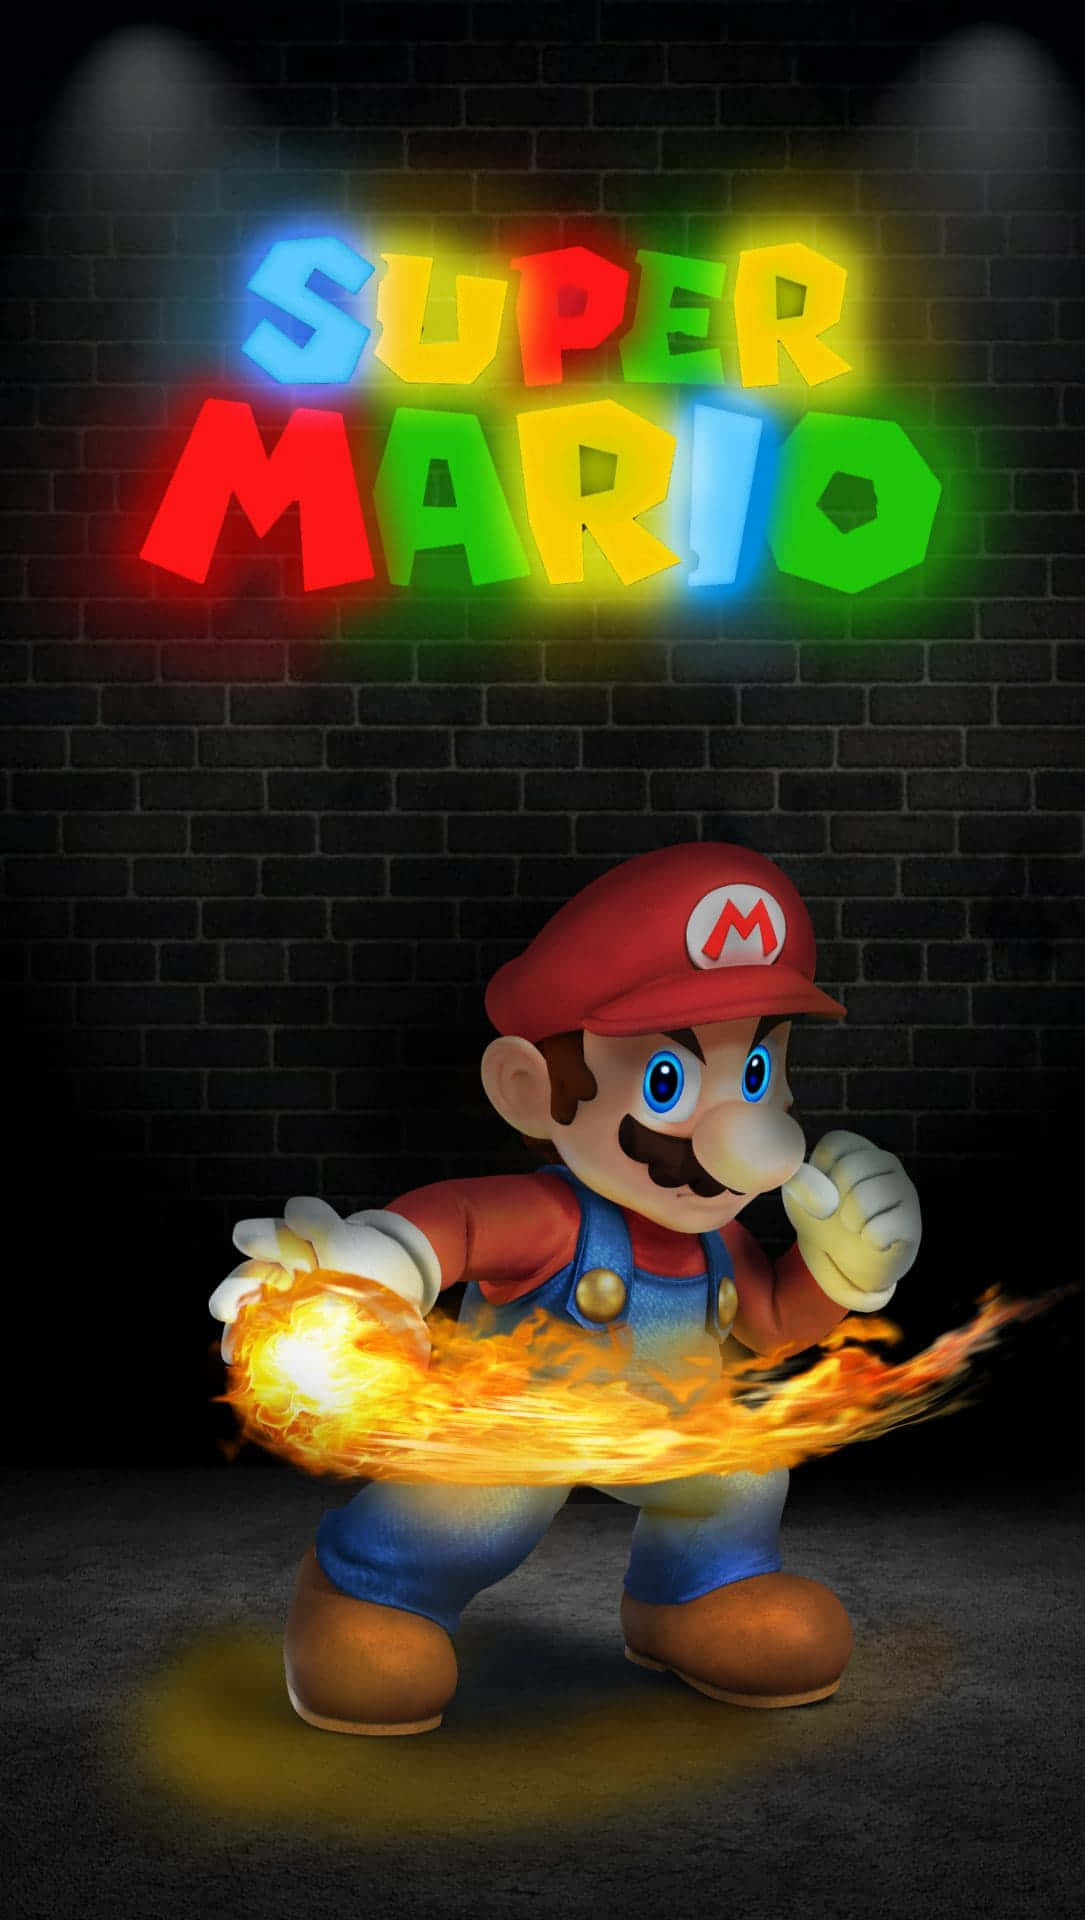 Enjoy Some Cool Retro Gaming Fun with Mario! Wallpaper